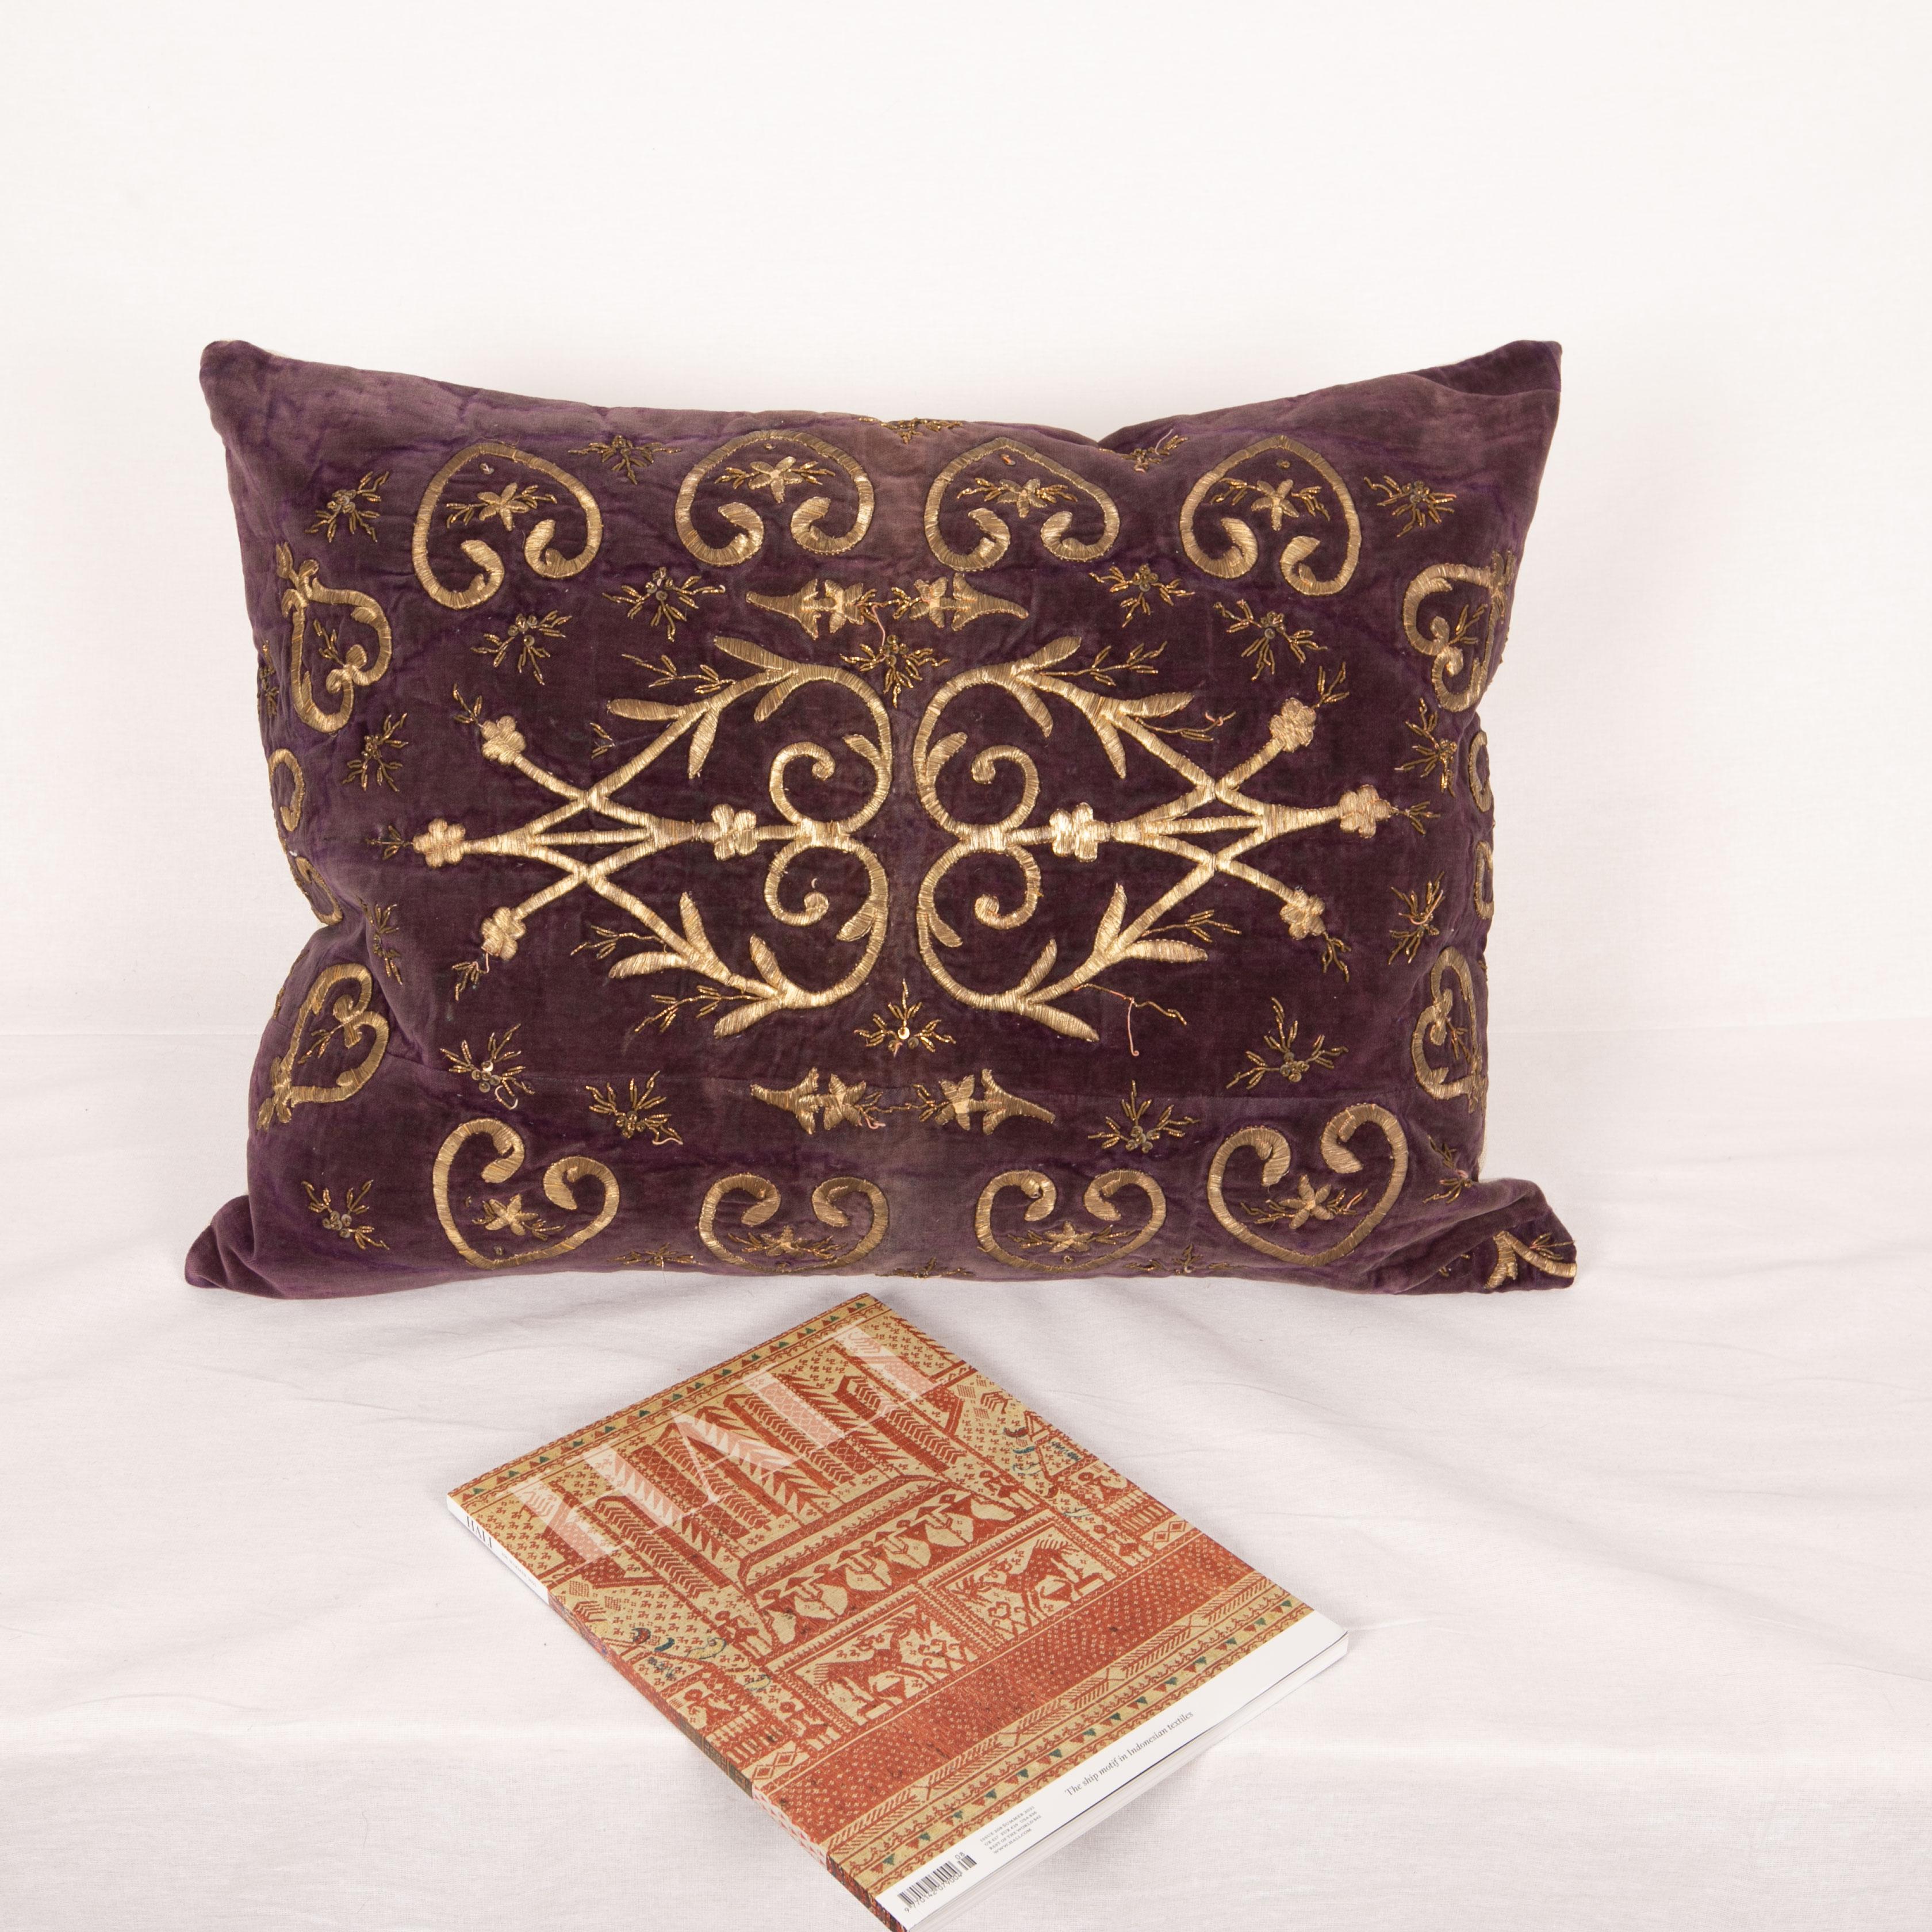 20th Century Antique Ottoman Turkish Sarma Pillow Case, Early 20th C